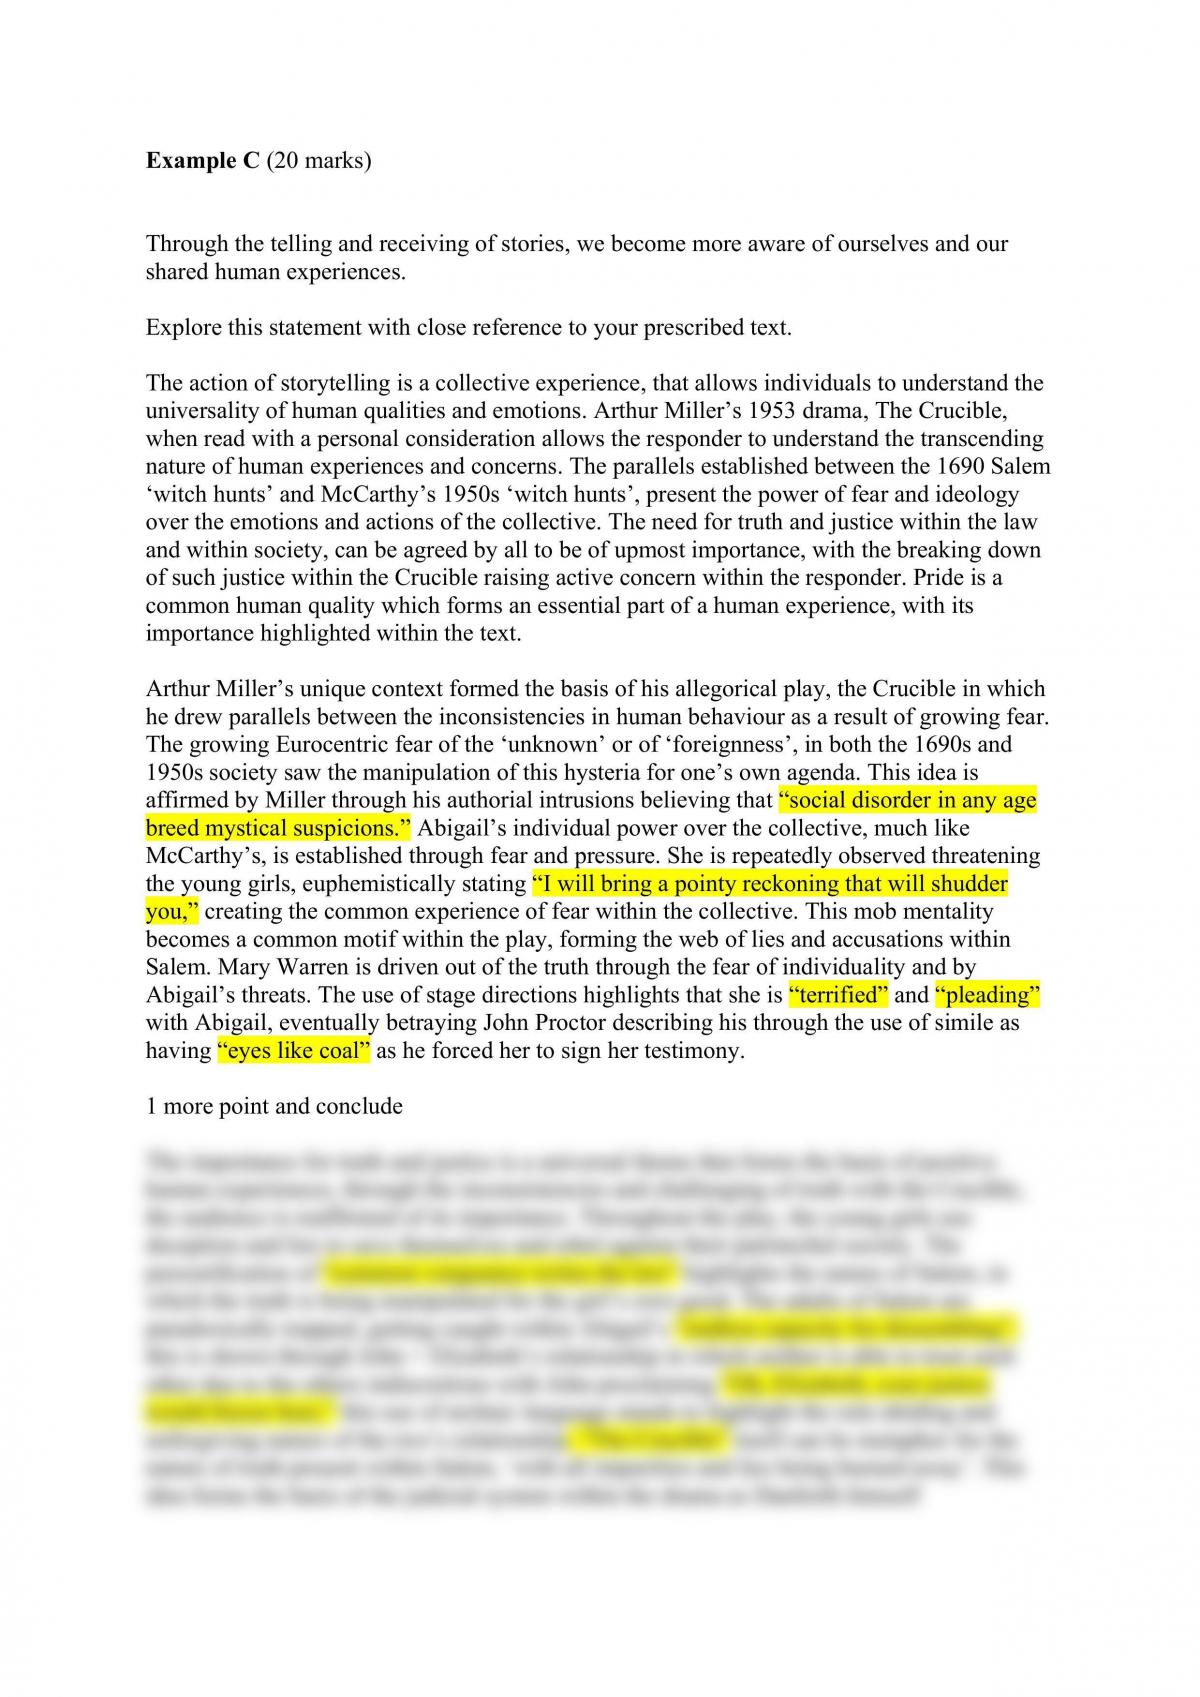 the crucible essays pdf grade 12 pdf